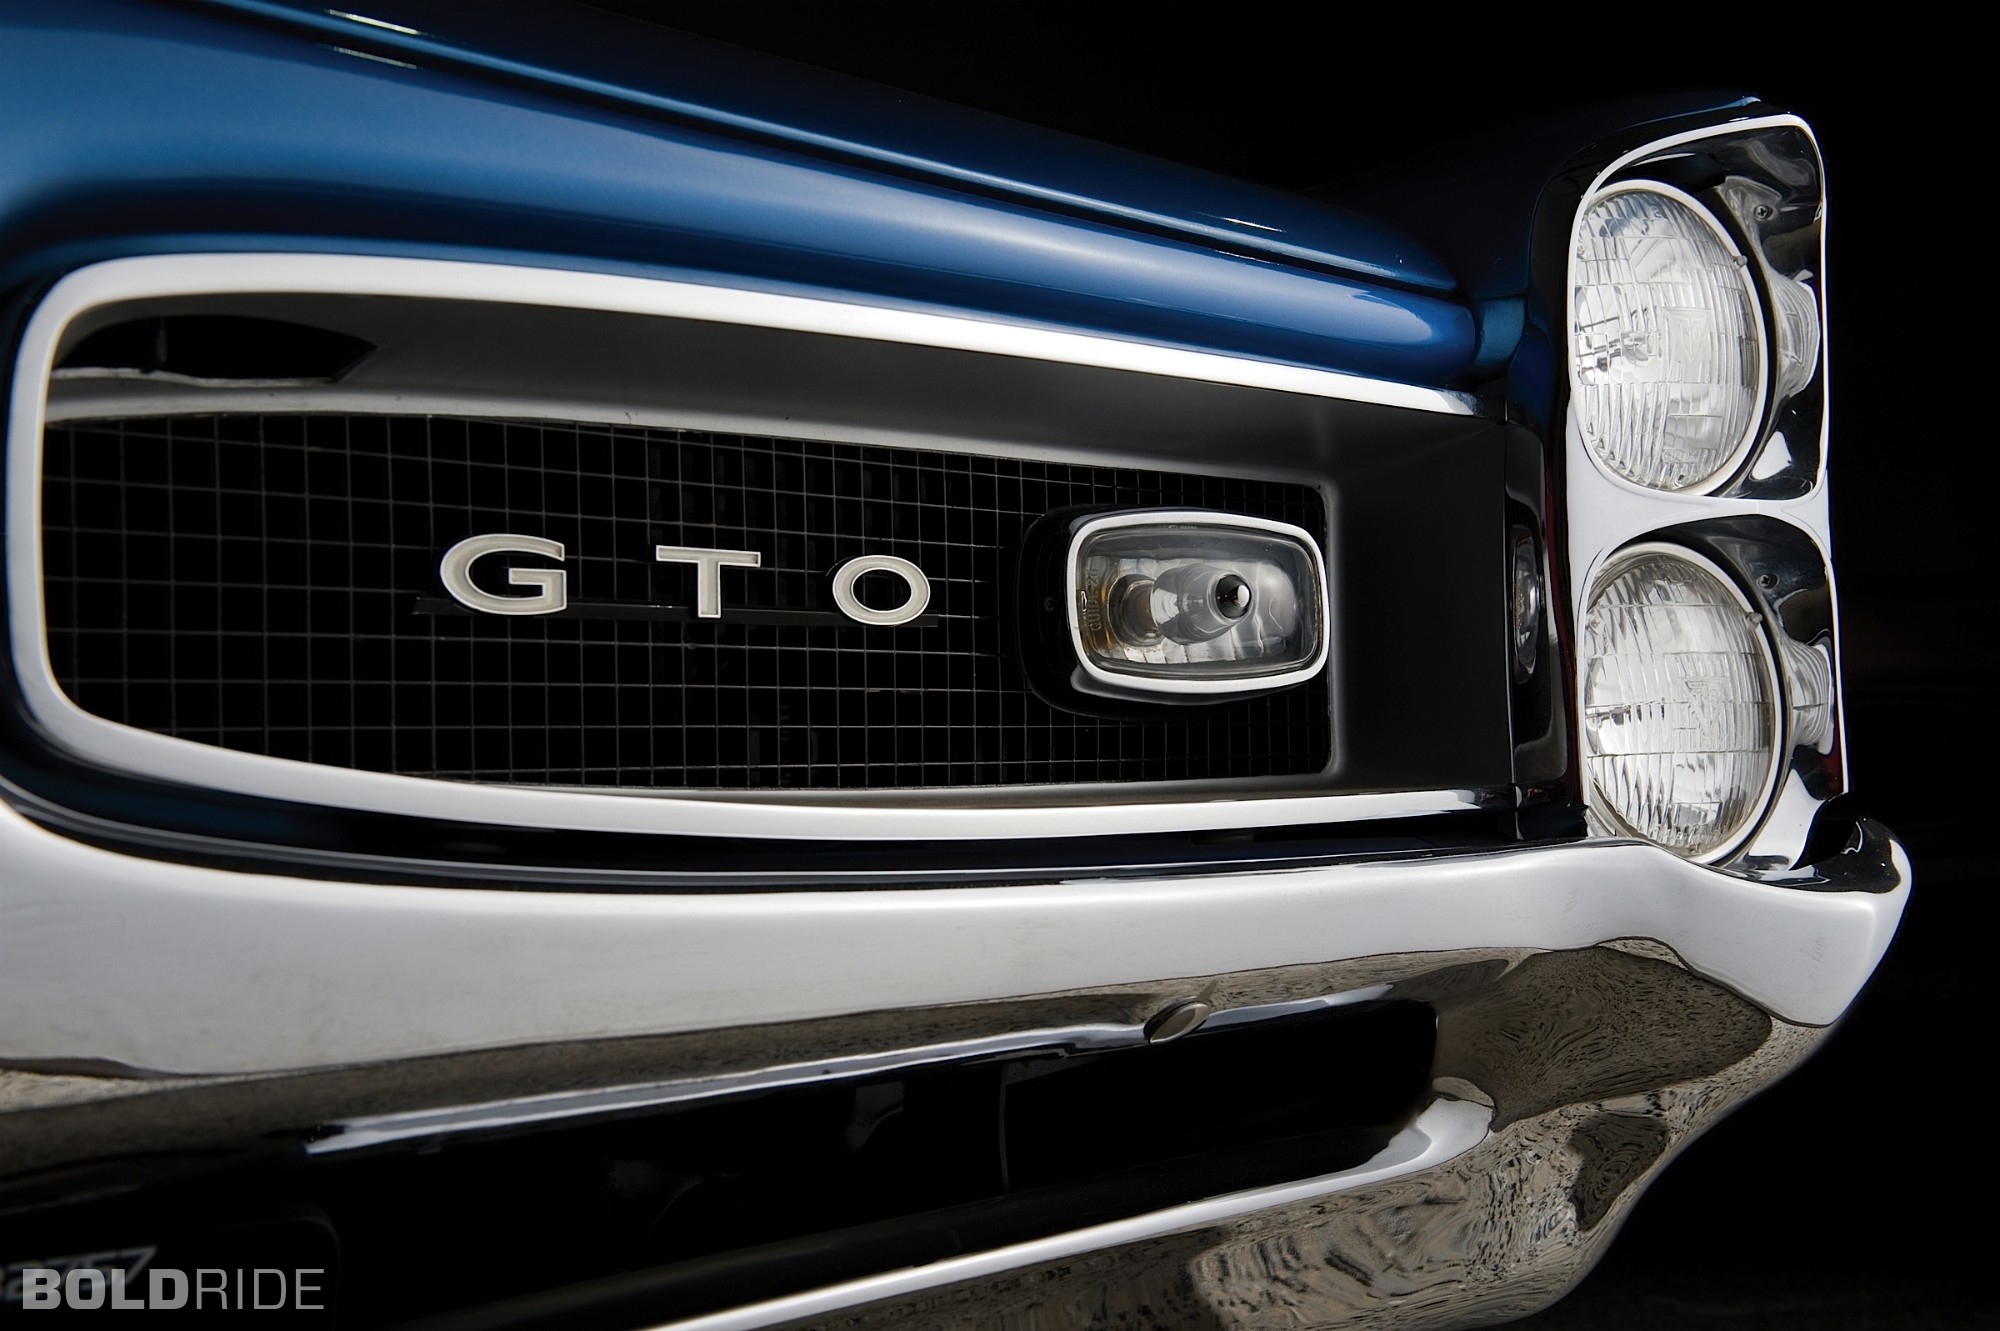 2000x1331 1966 Pontiac GTO - No Compromise - Hot Rod Network 1966 Pontiac GTO  Wallpaper ...